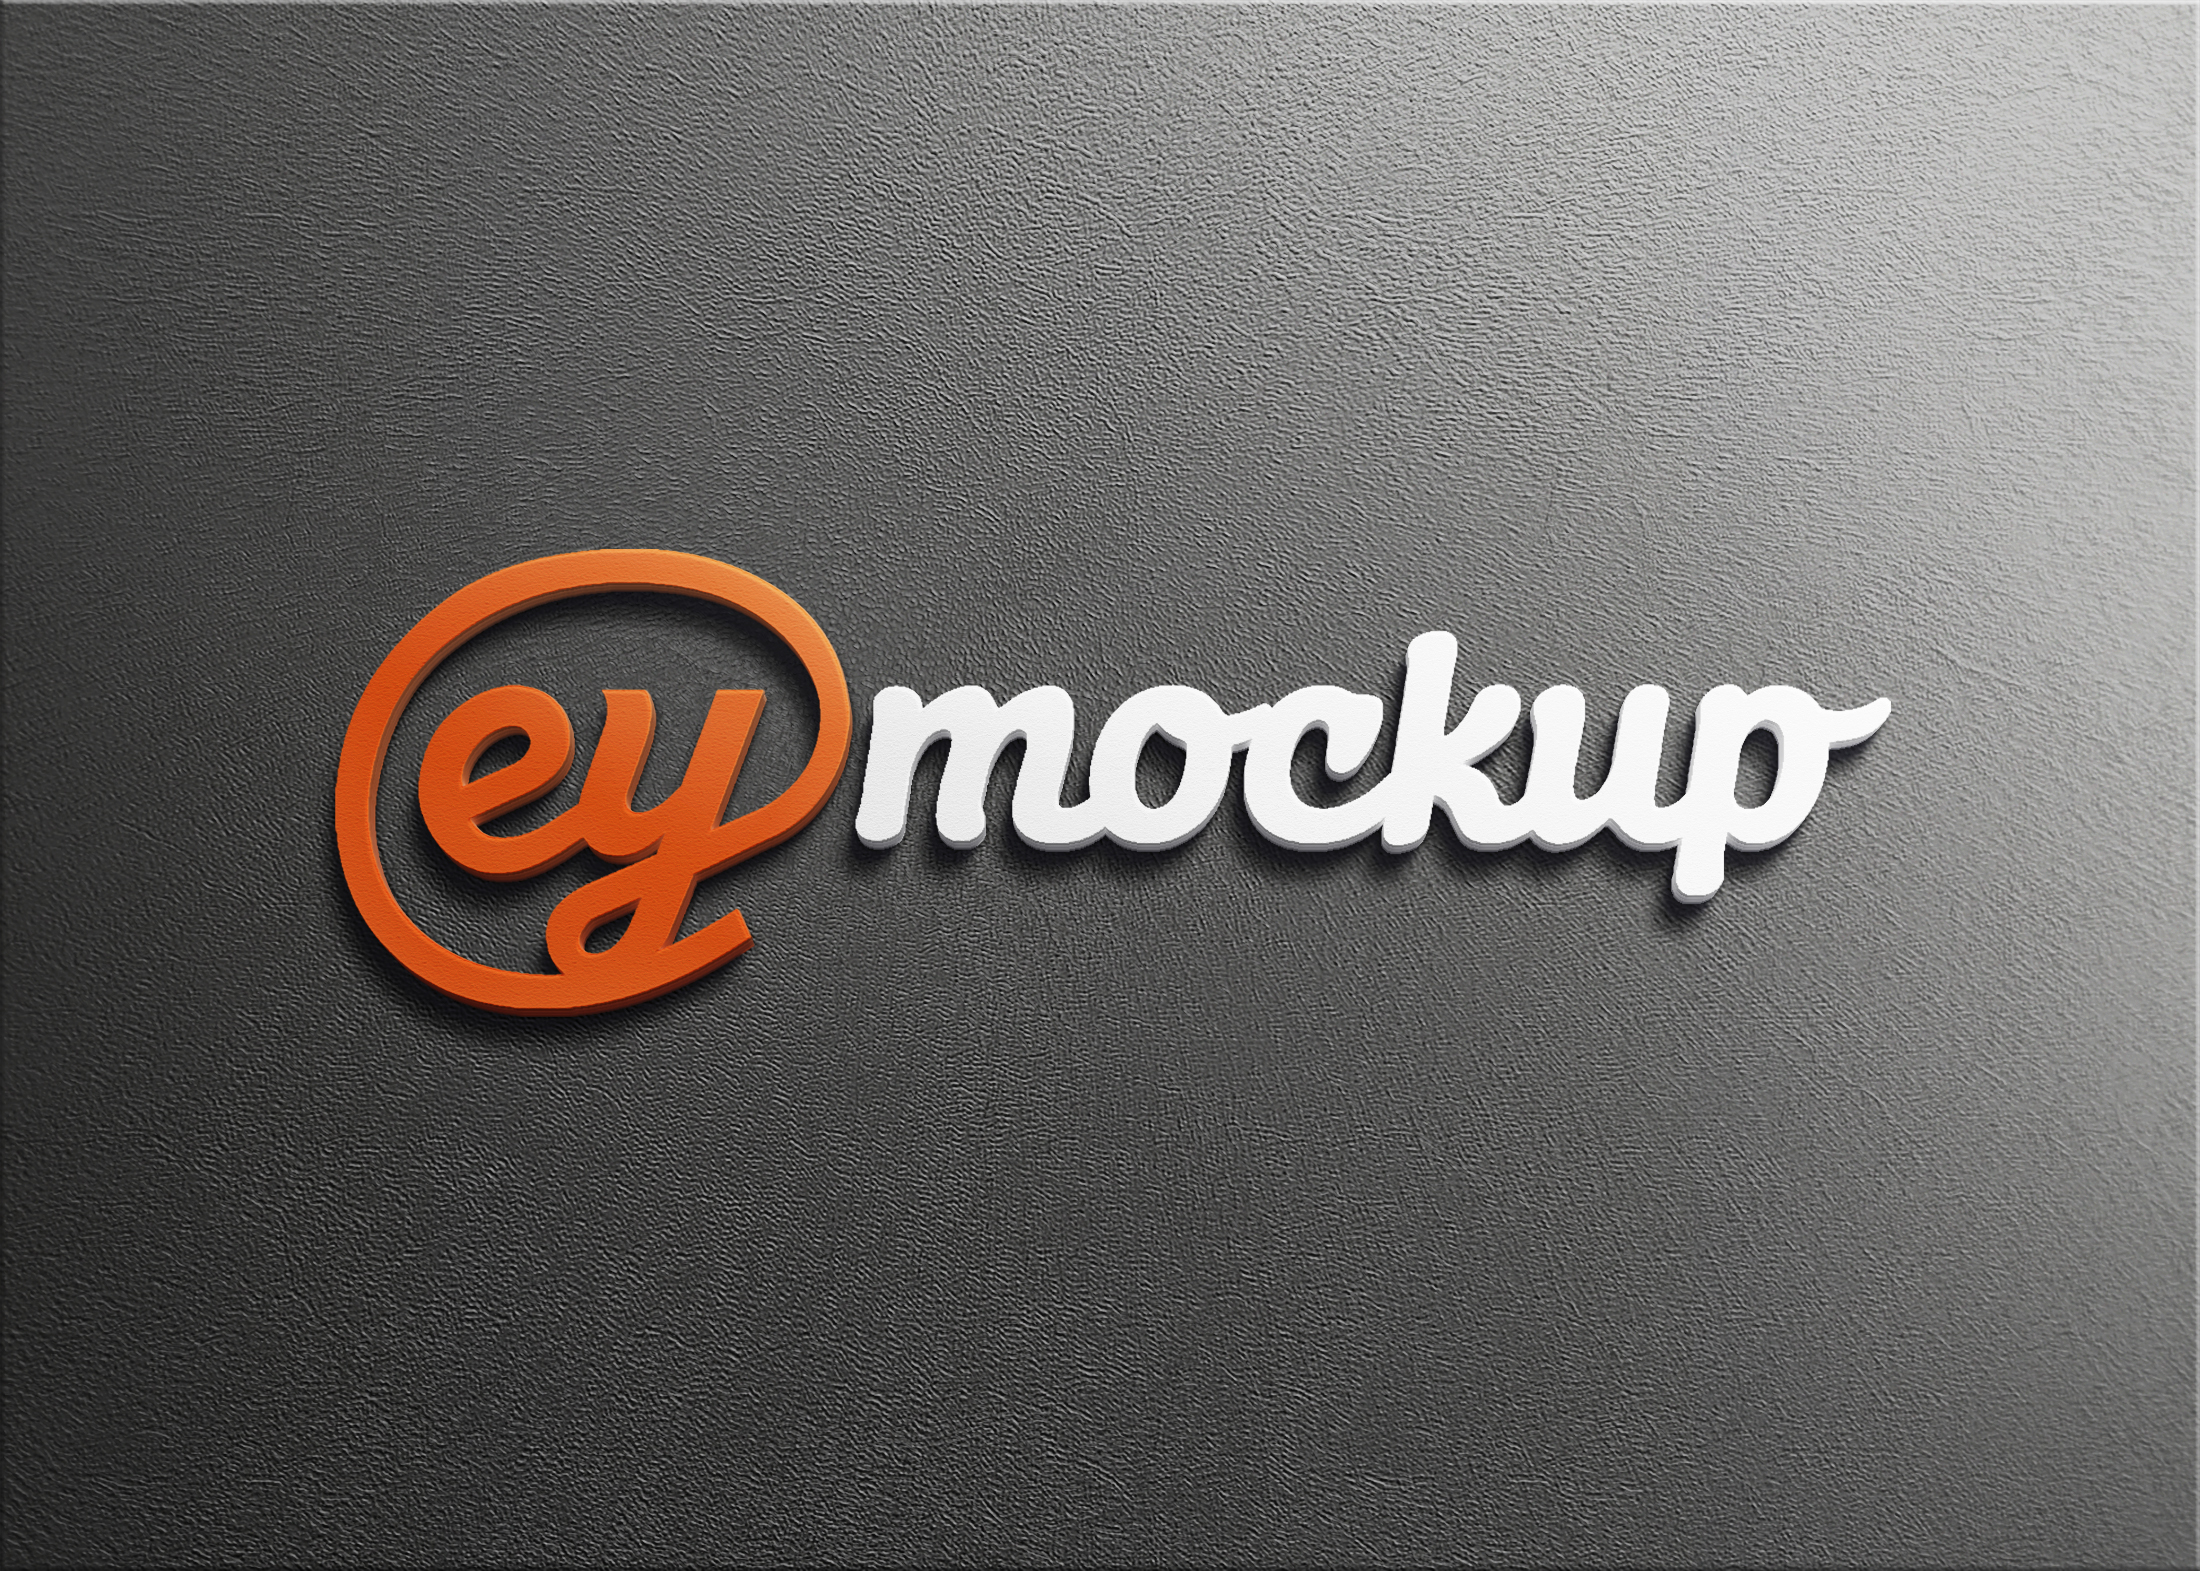 eymockup Free Clean 3d logo mockup